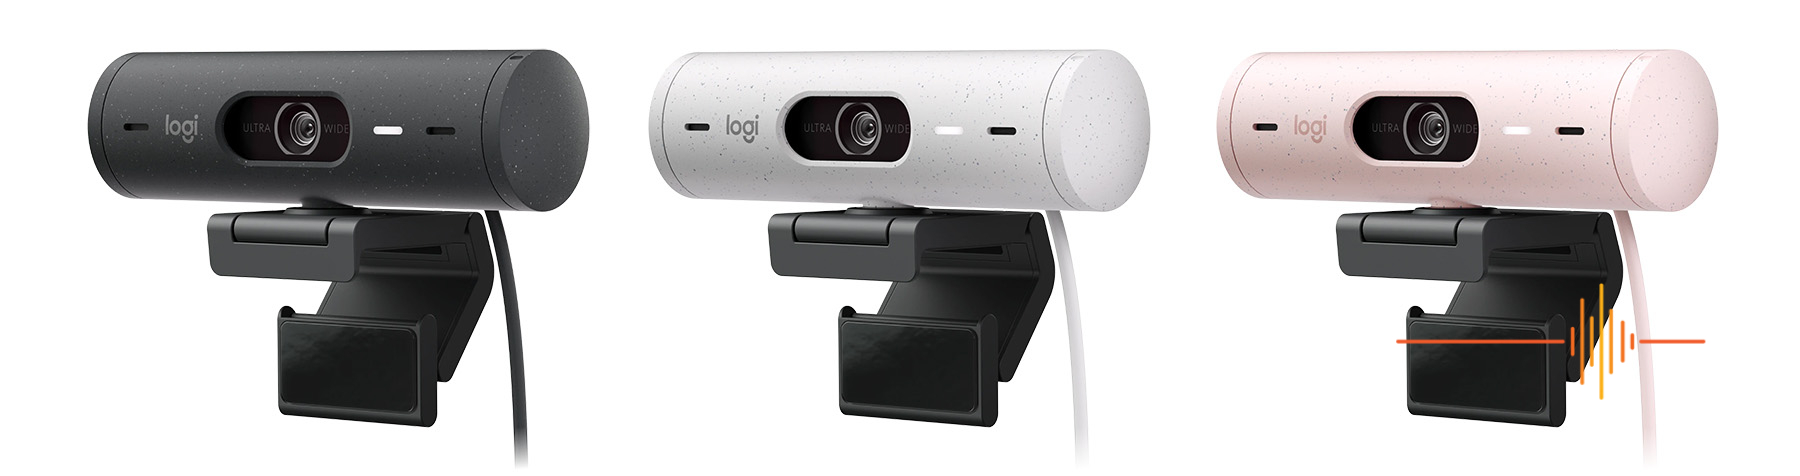 Logitech Brio 300 vs Brio 500 Webcam